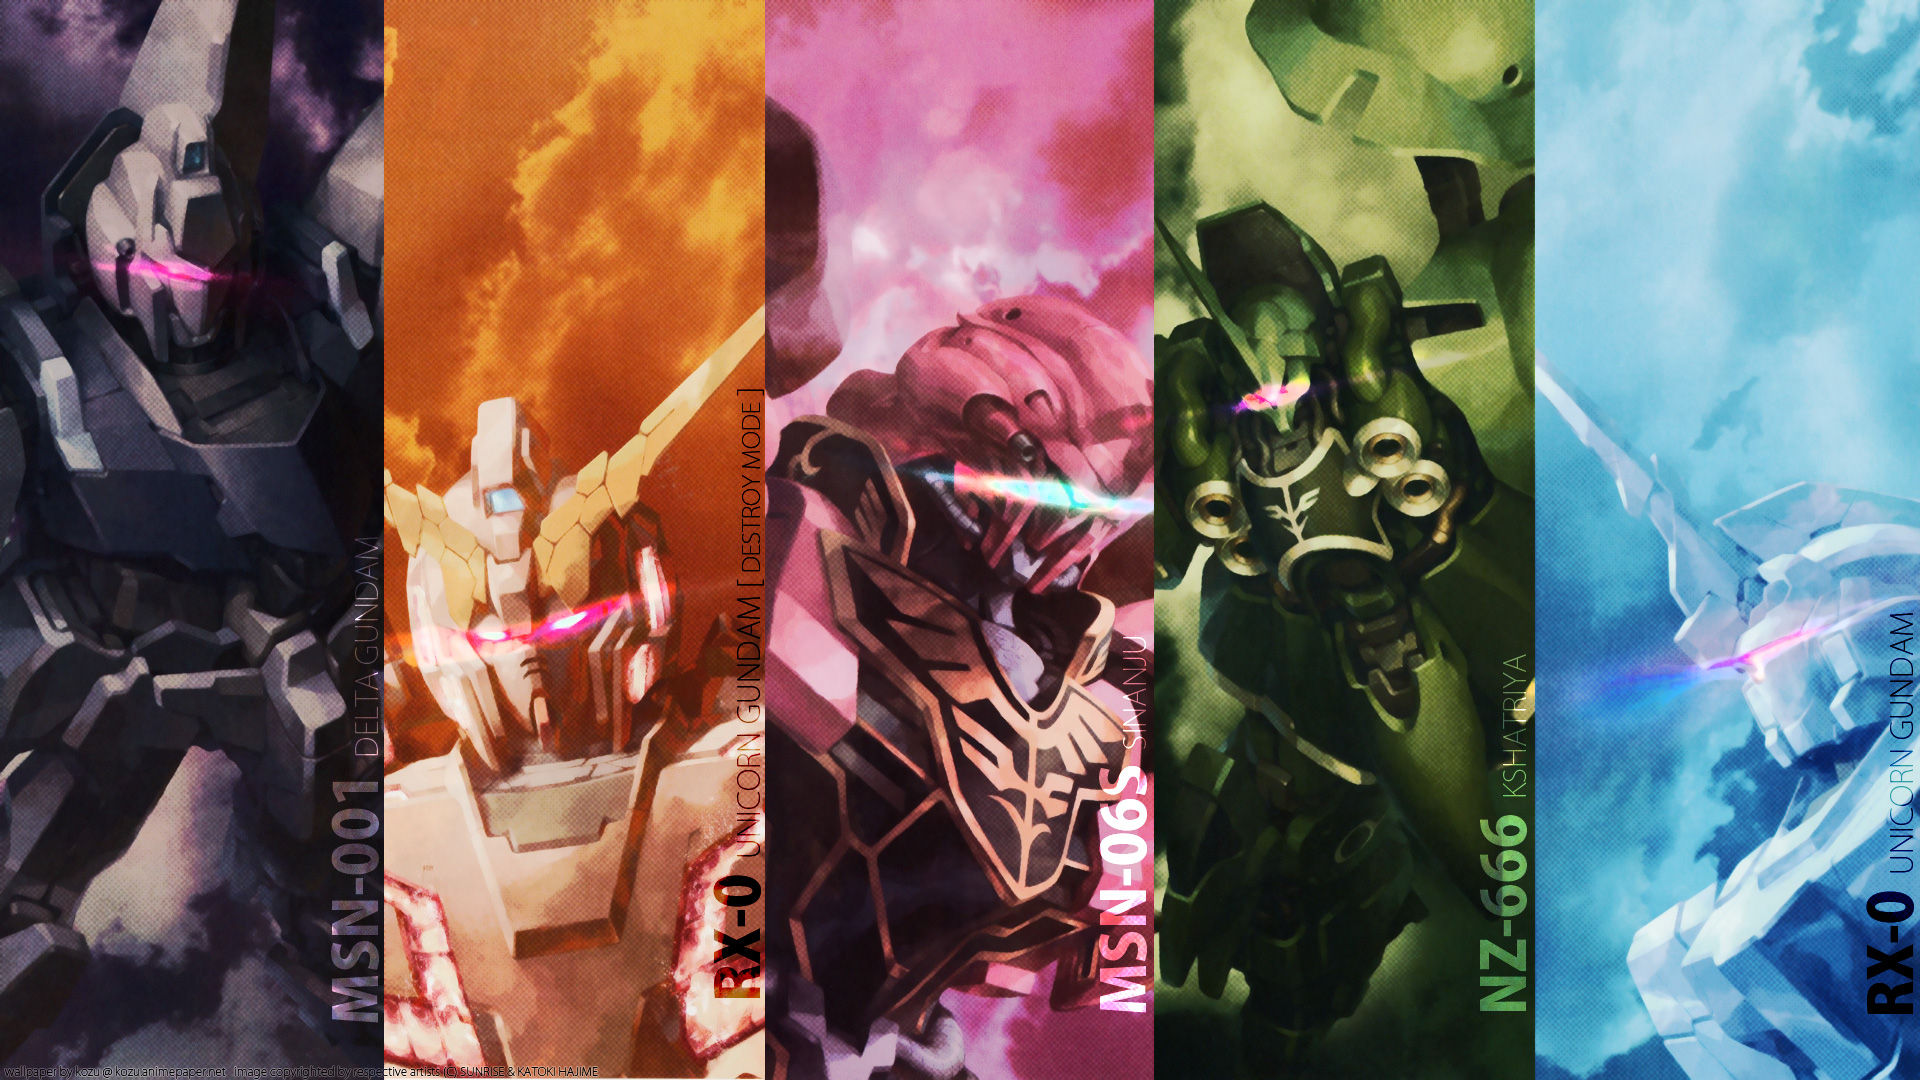 Anime Mobile Suit Gundam Unicorn HD Wallpaper | Background Image